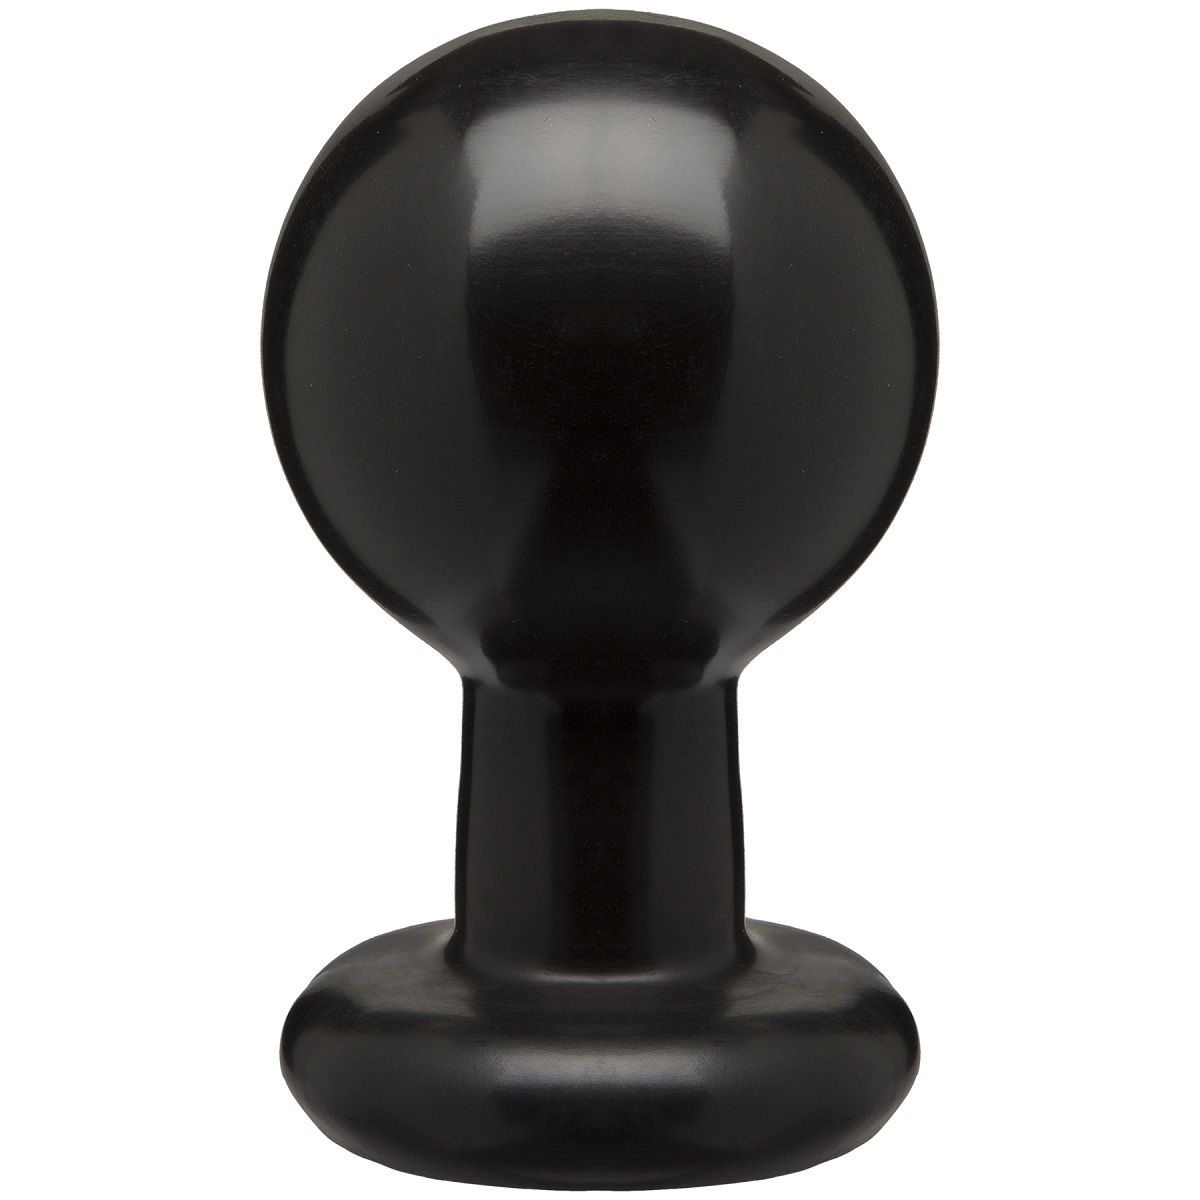 Круглая черная анальная пробка Classic Round Butt Plugs Large - 12,1 см. - фото 412921